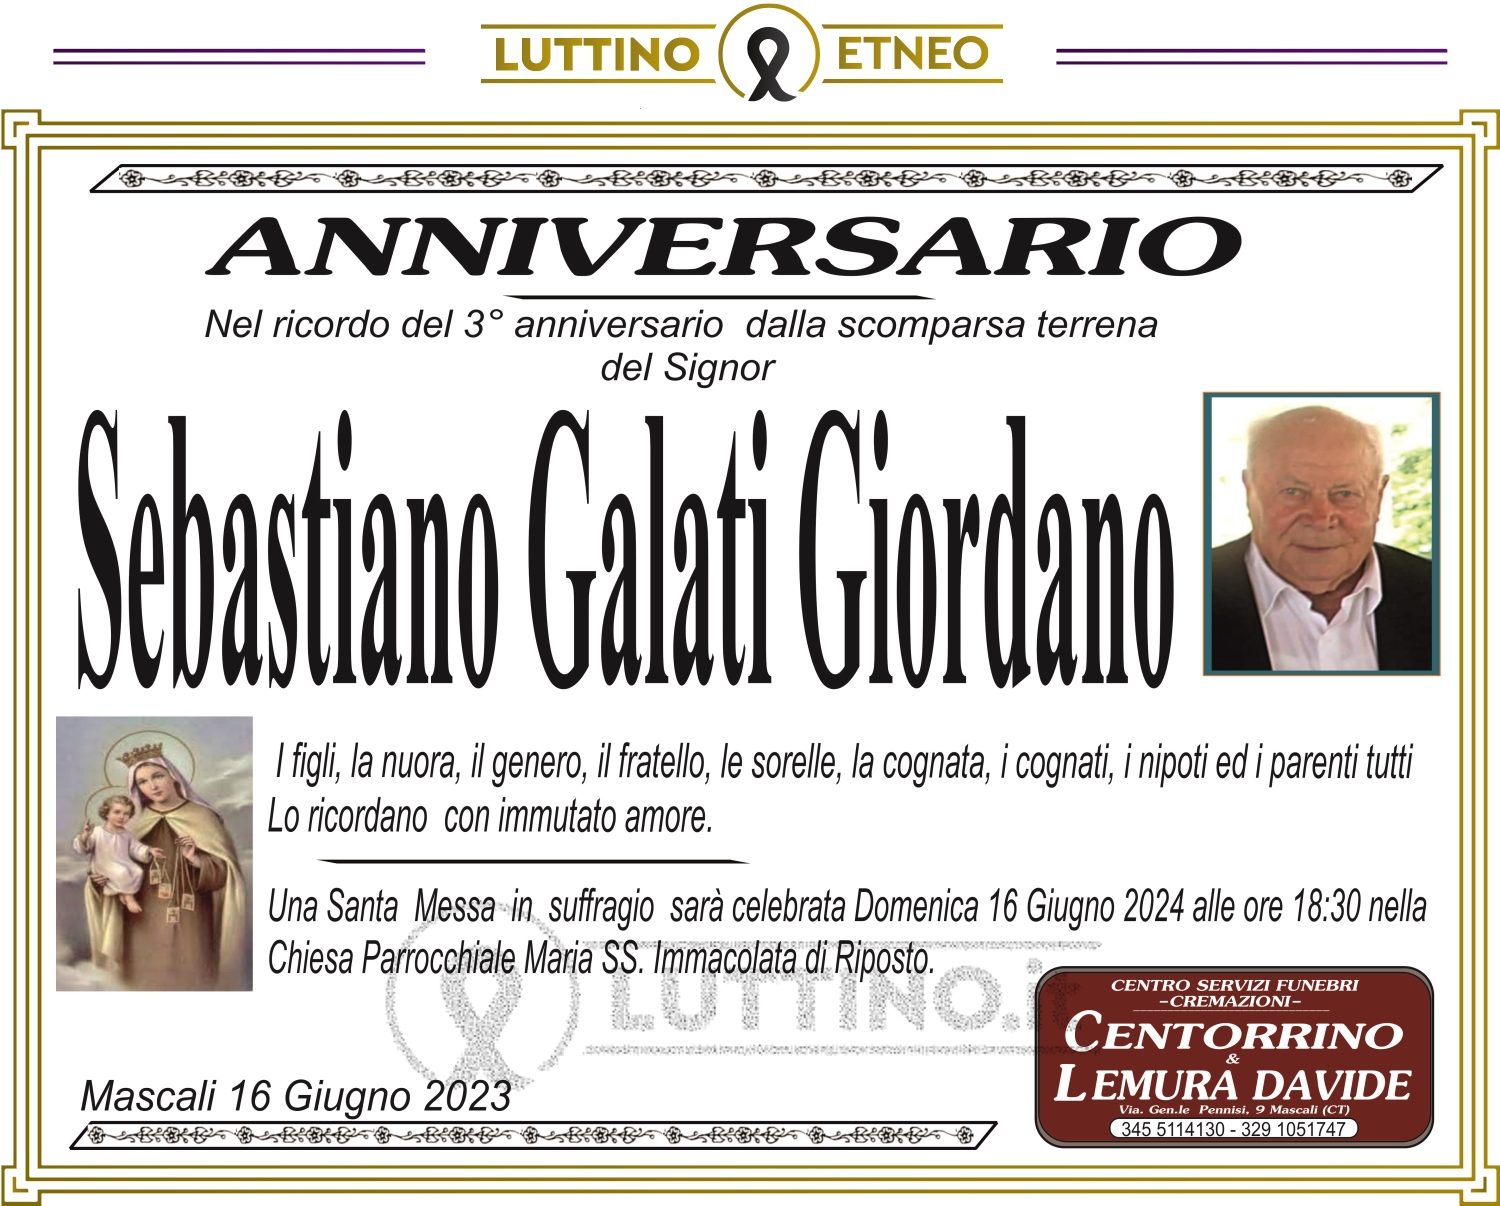 Sebastiano Galati Giordano